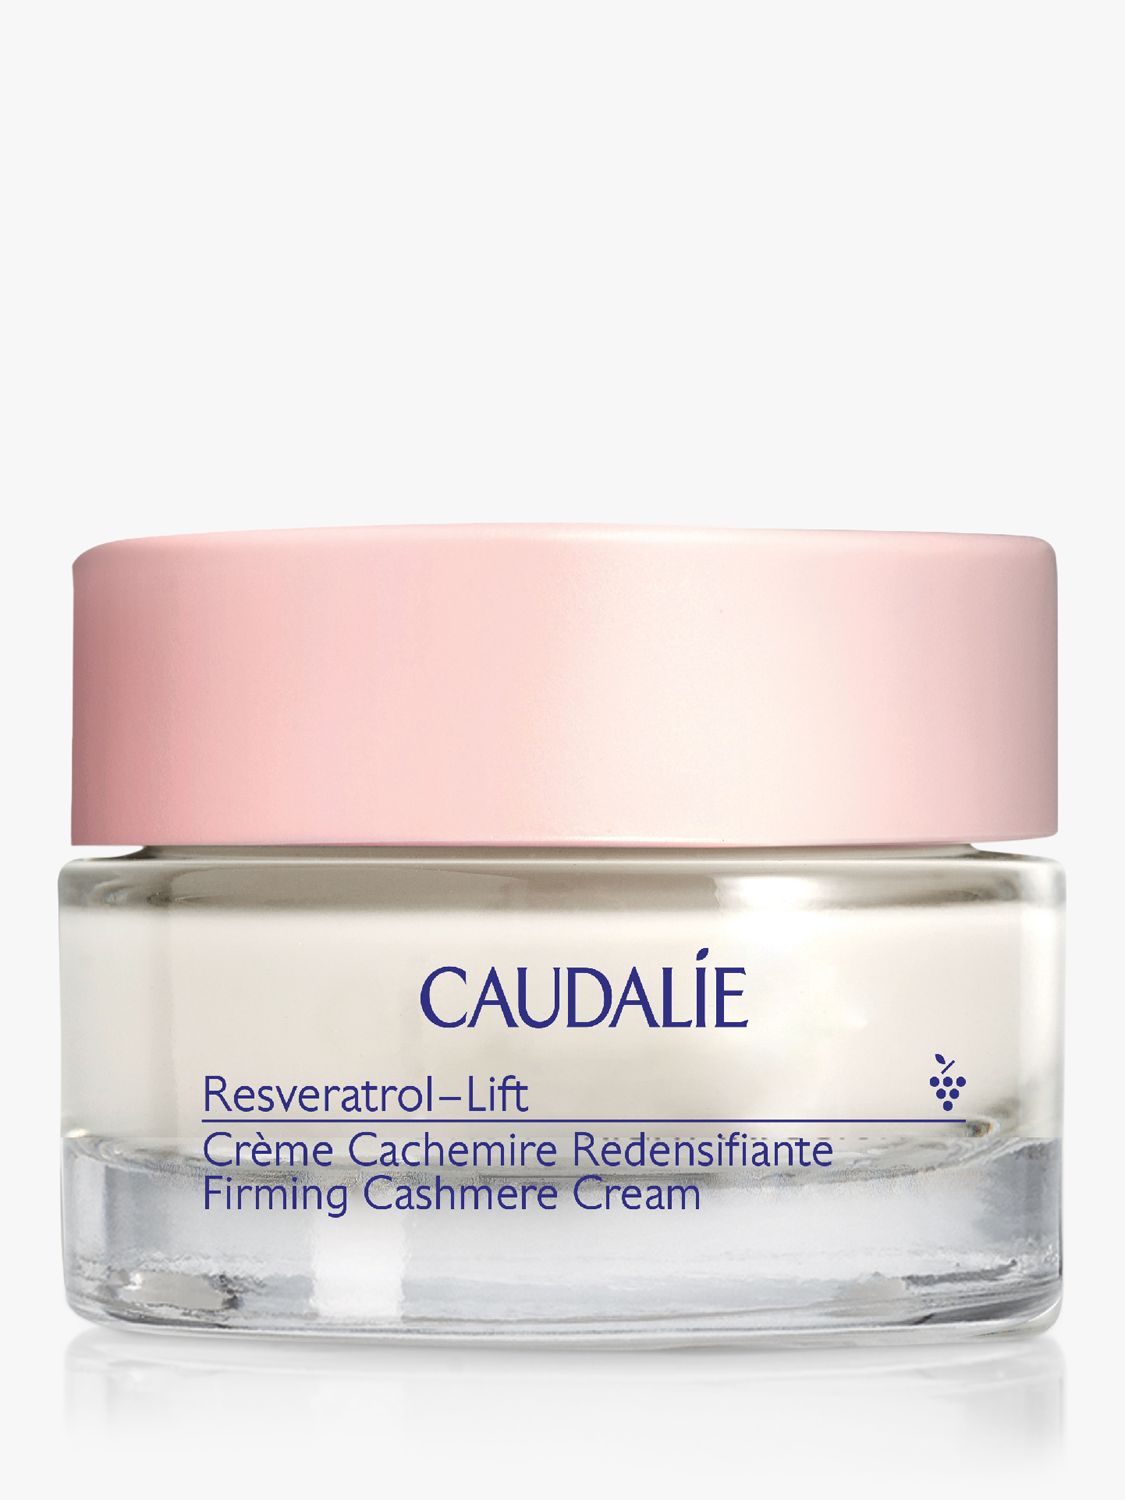 Caudalie Resveratrol-Lift Firming Cashmere Cream, 15ml 1